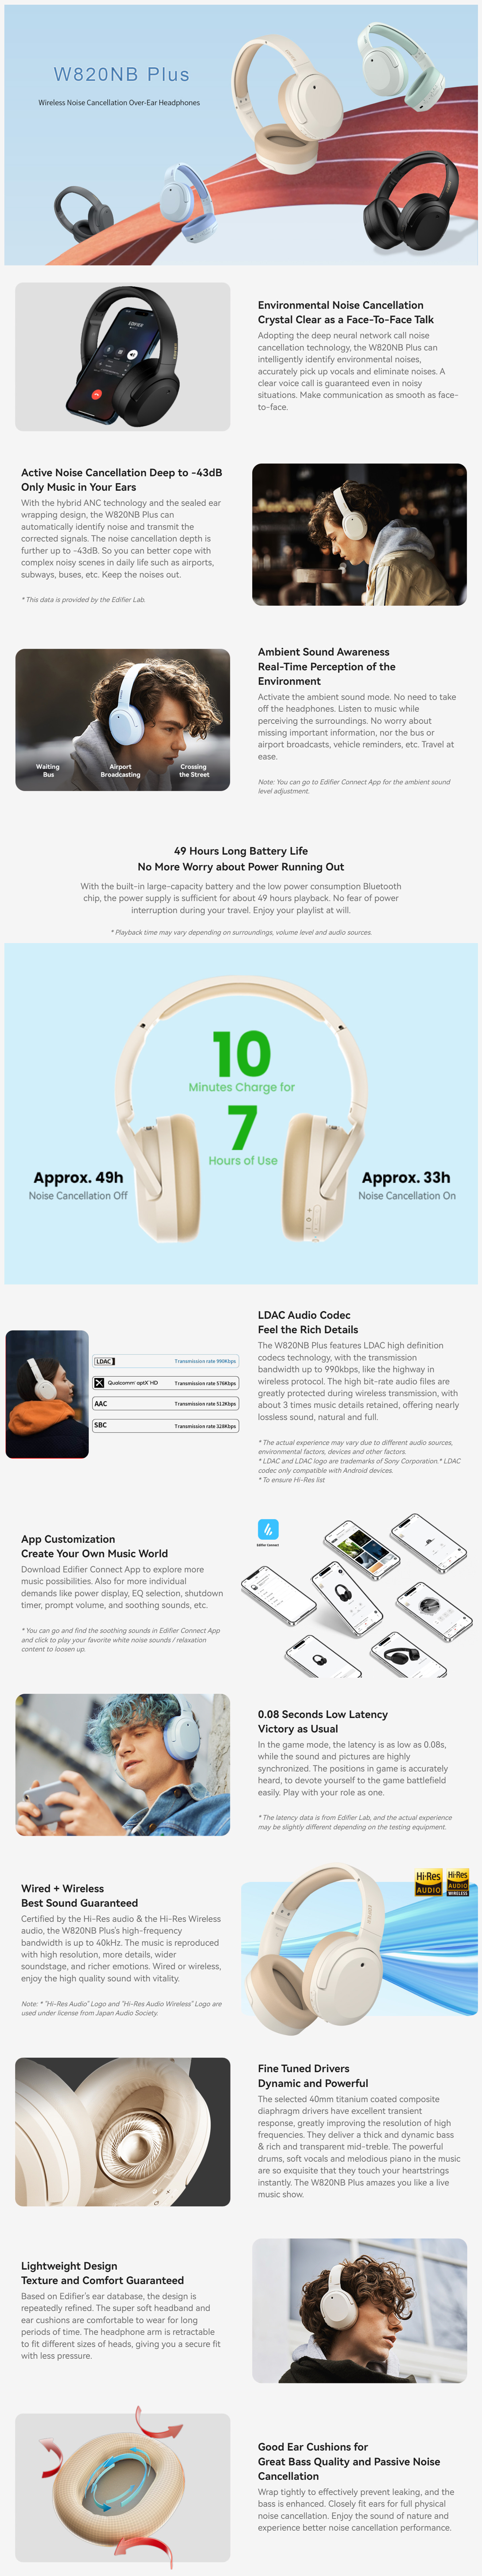 Headphones-Edifier-W820NB-Plus-Active-Noise-Cancelling-Wireless-Bluetooth-Headphone-Green-7